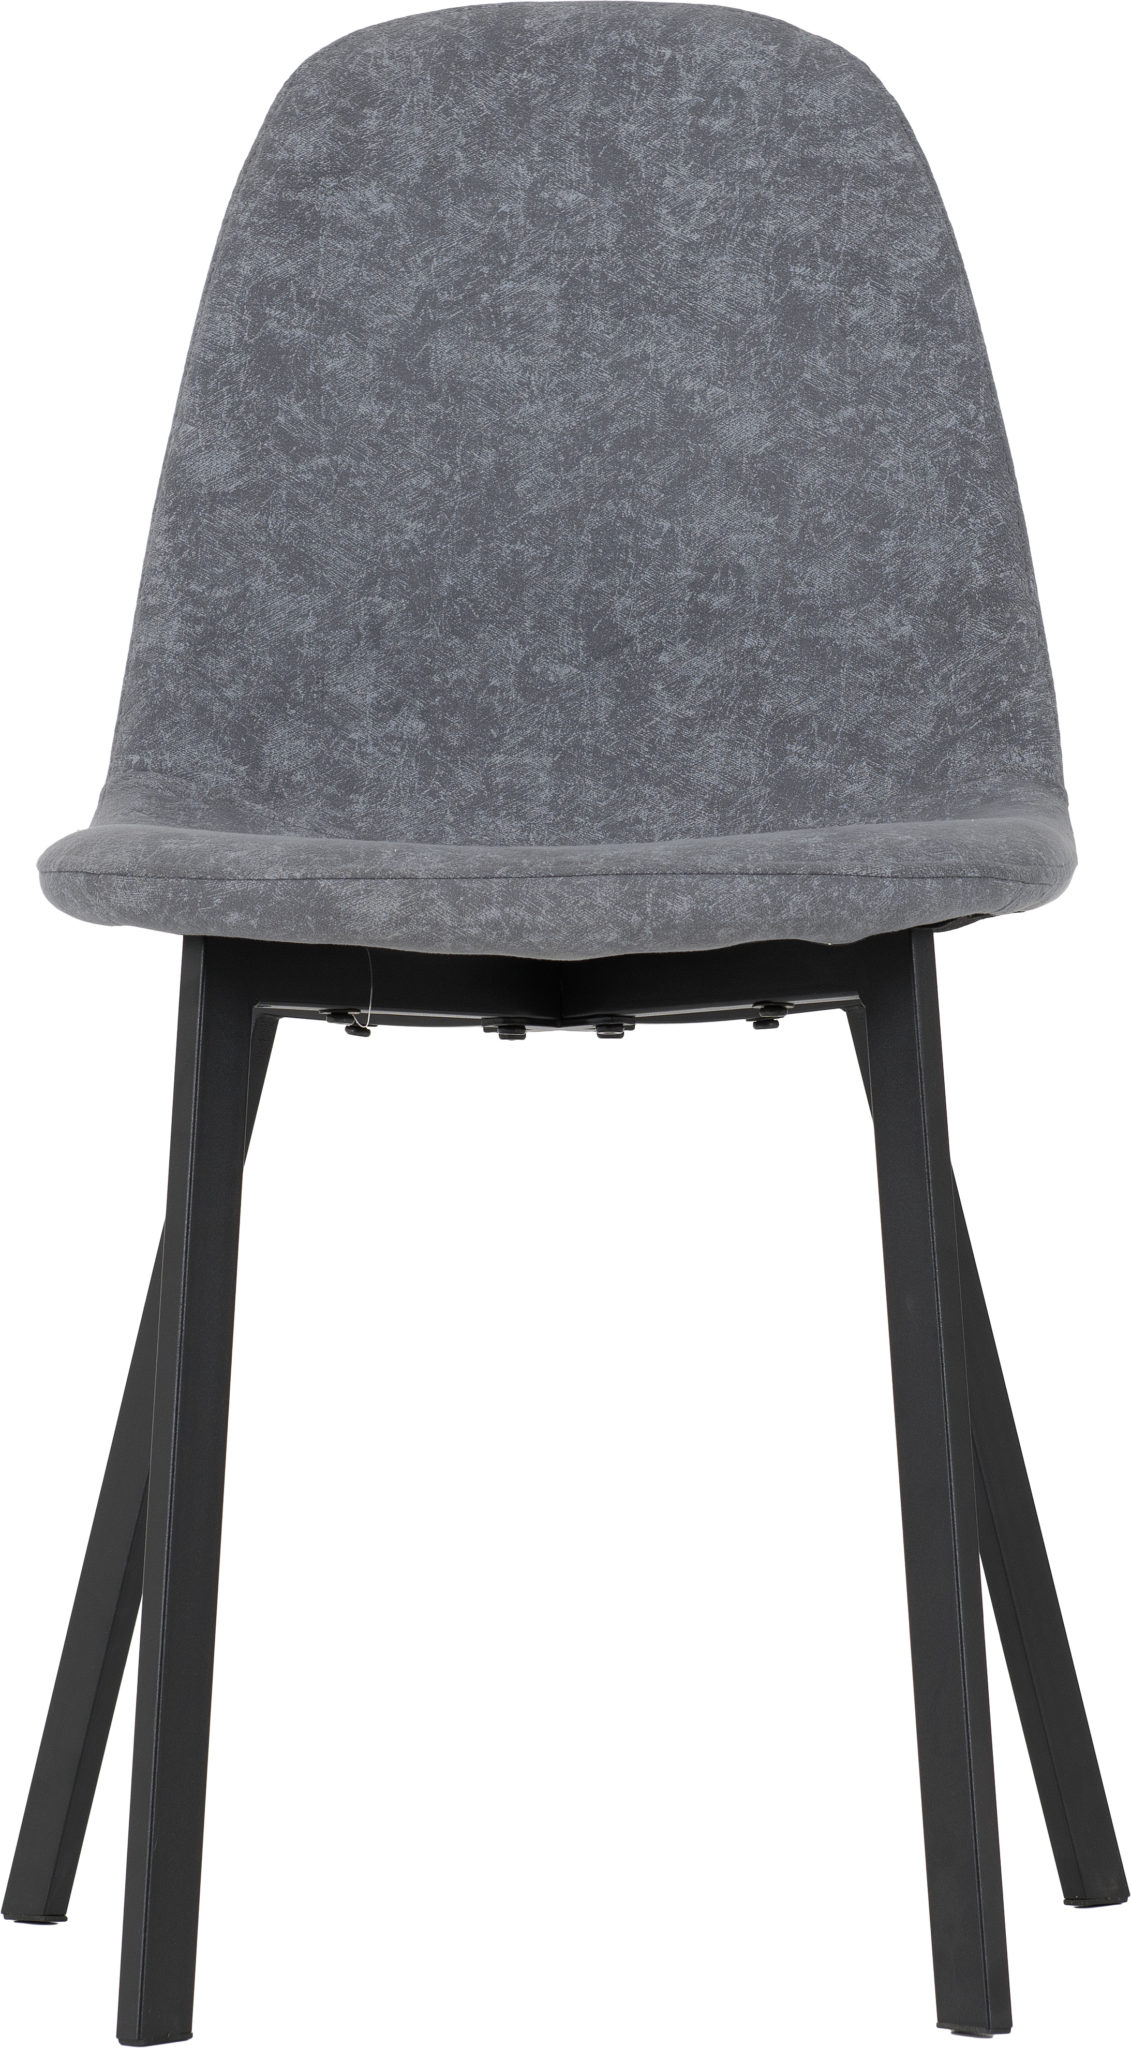 Berlin Dining Chair in Dark Grey Fabric